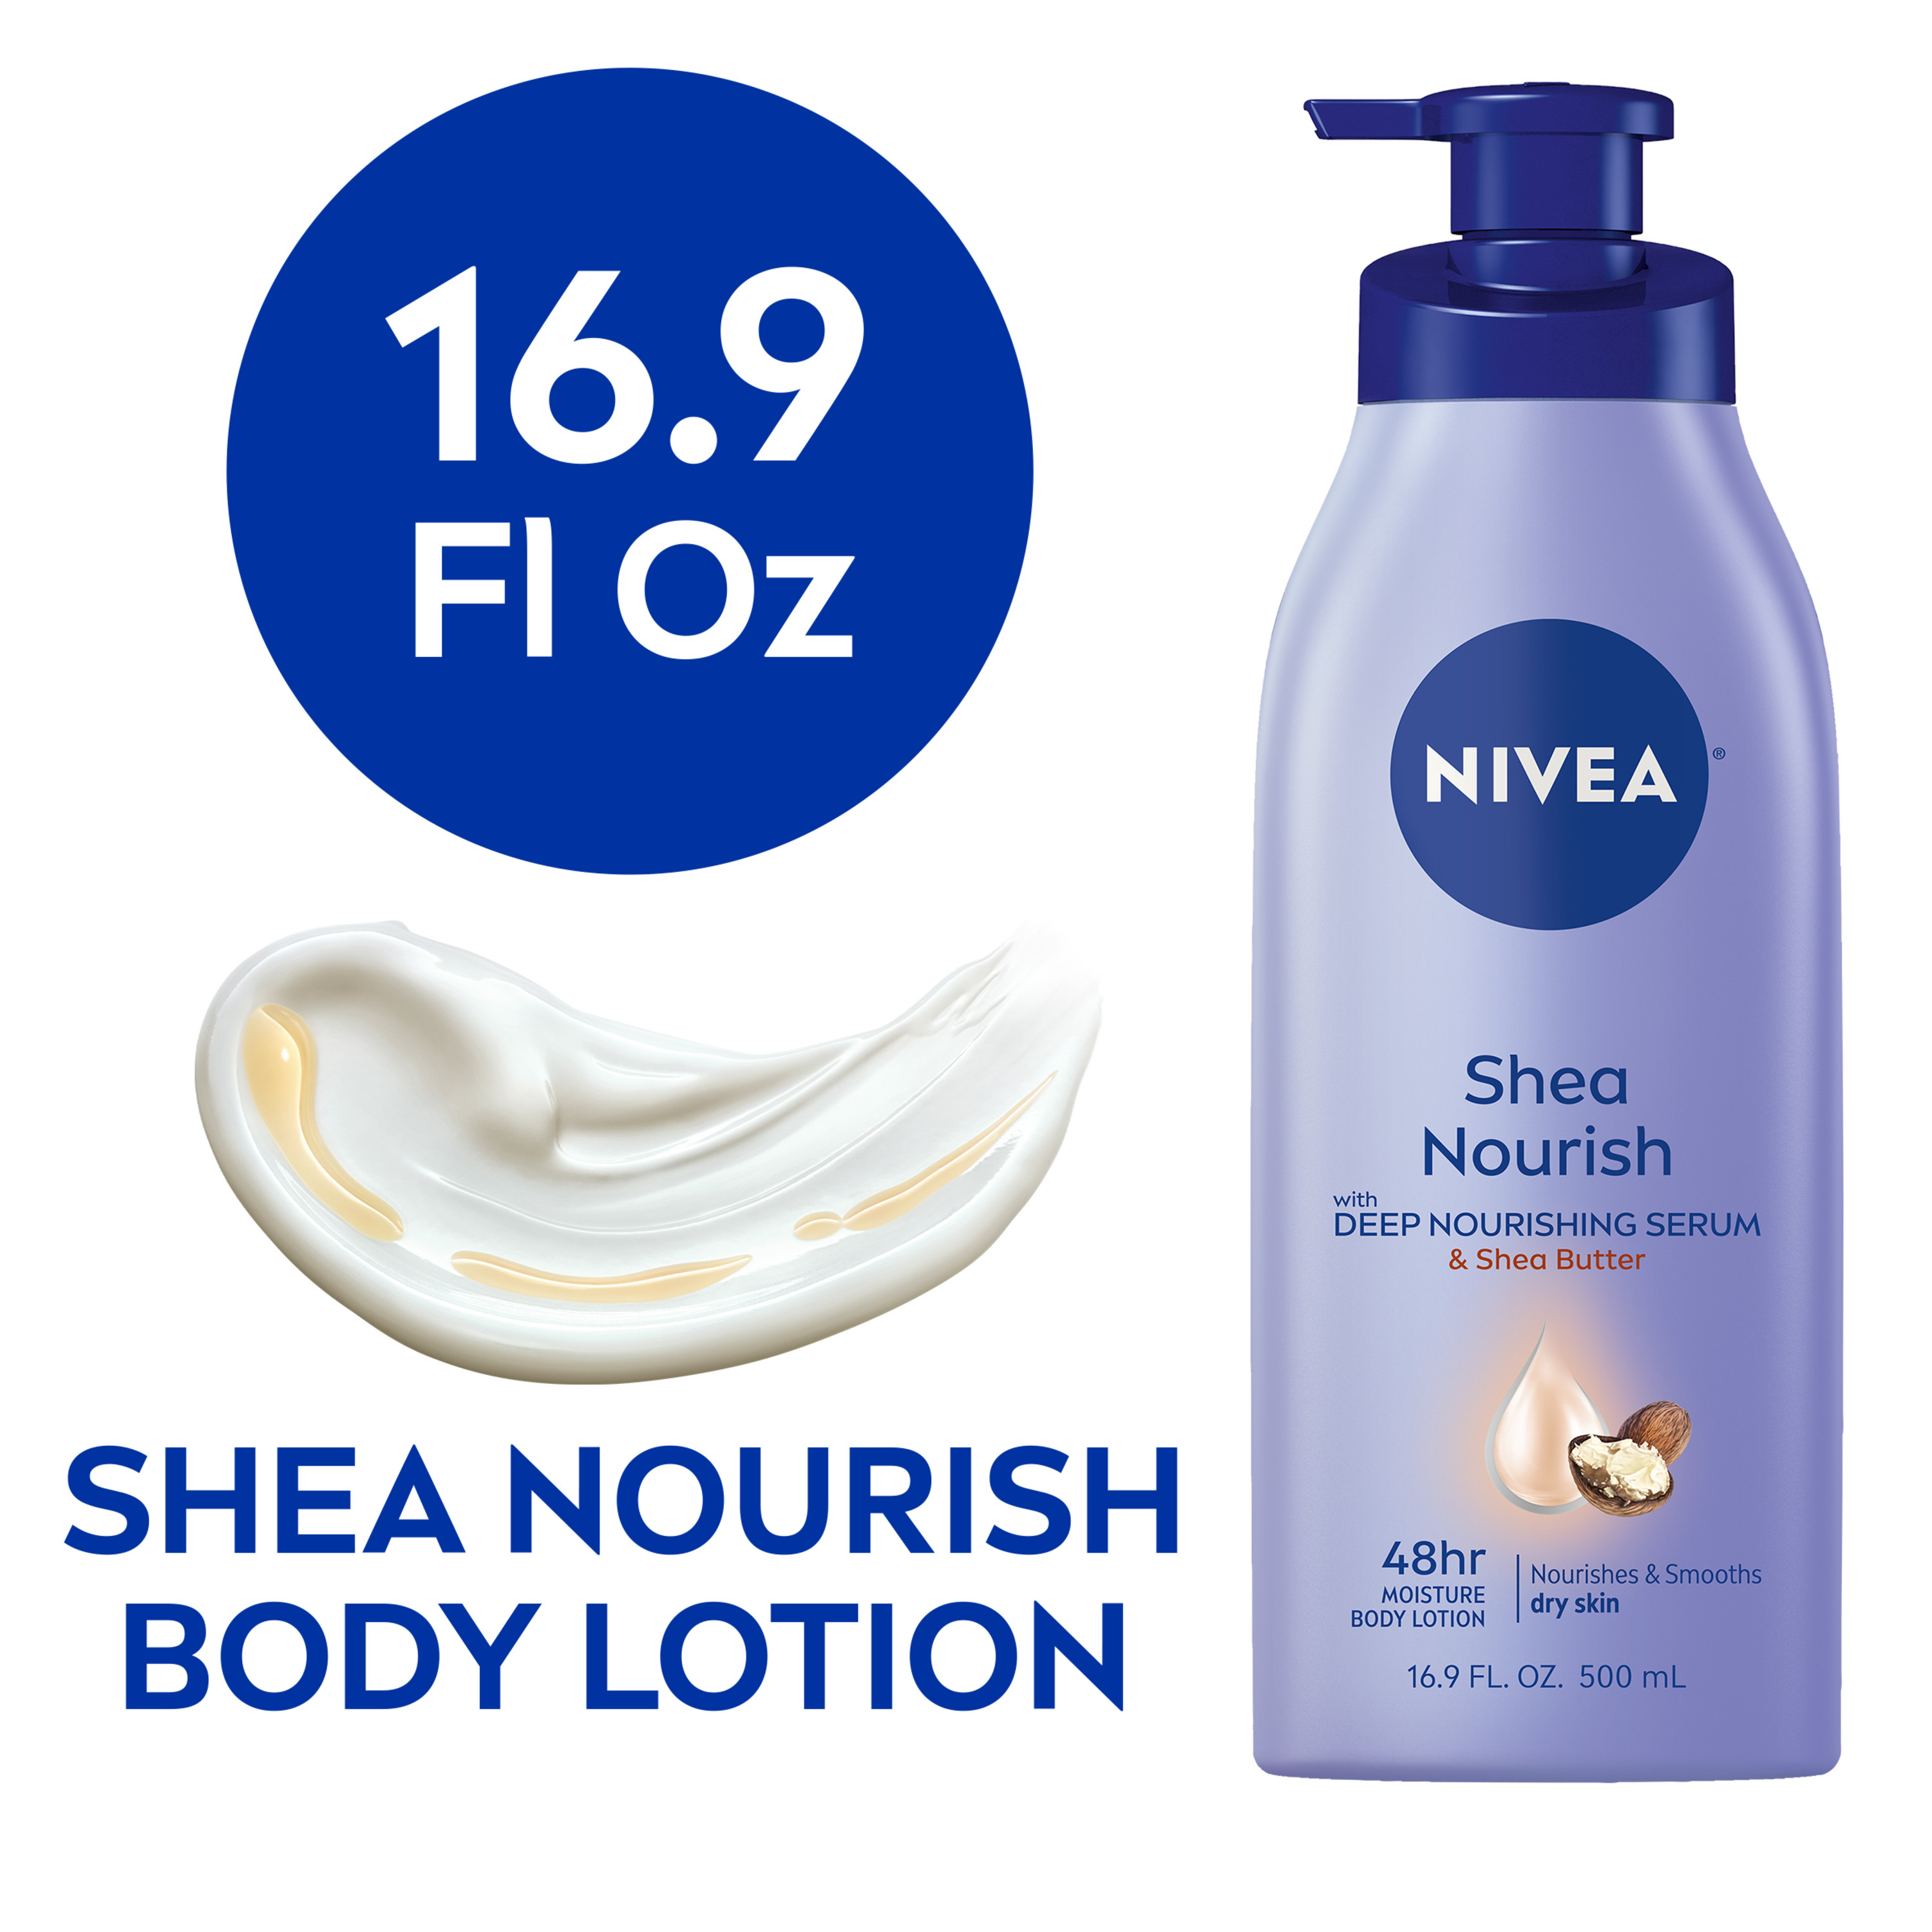 NIVEA Shea Nourish Body Lotion, Dry Skin Lotion with Shea Butter, 16.9 Fl Oz Pump Bottle - image 1 of 12